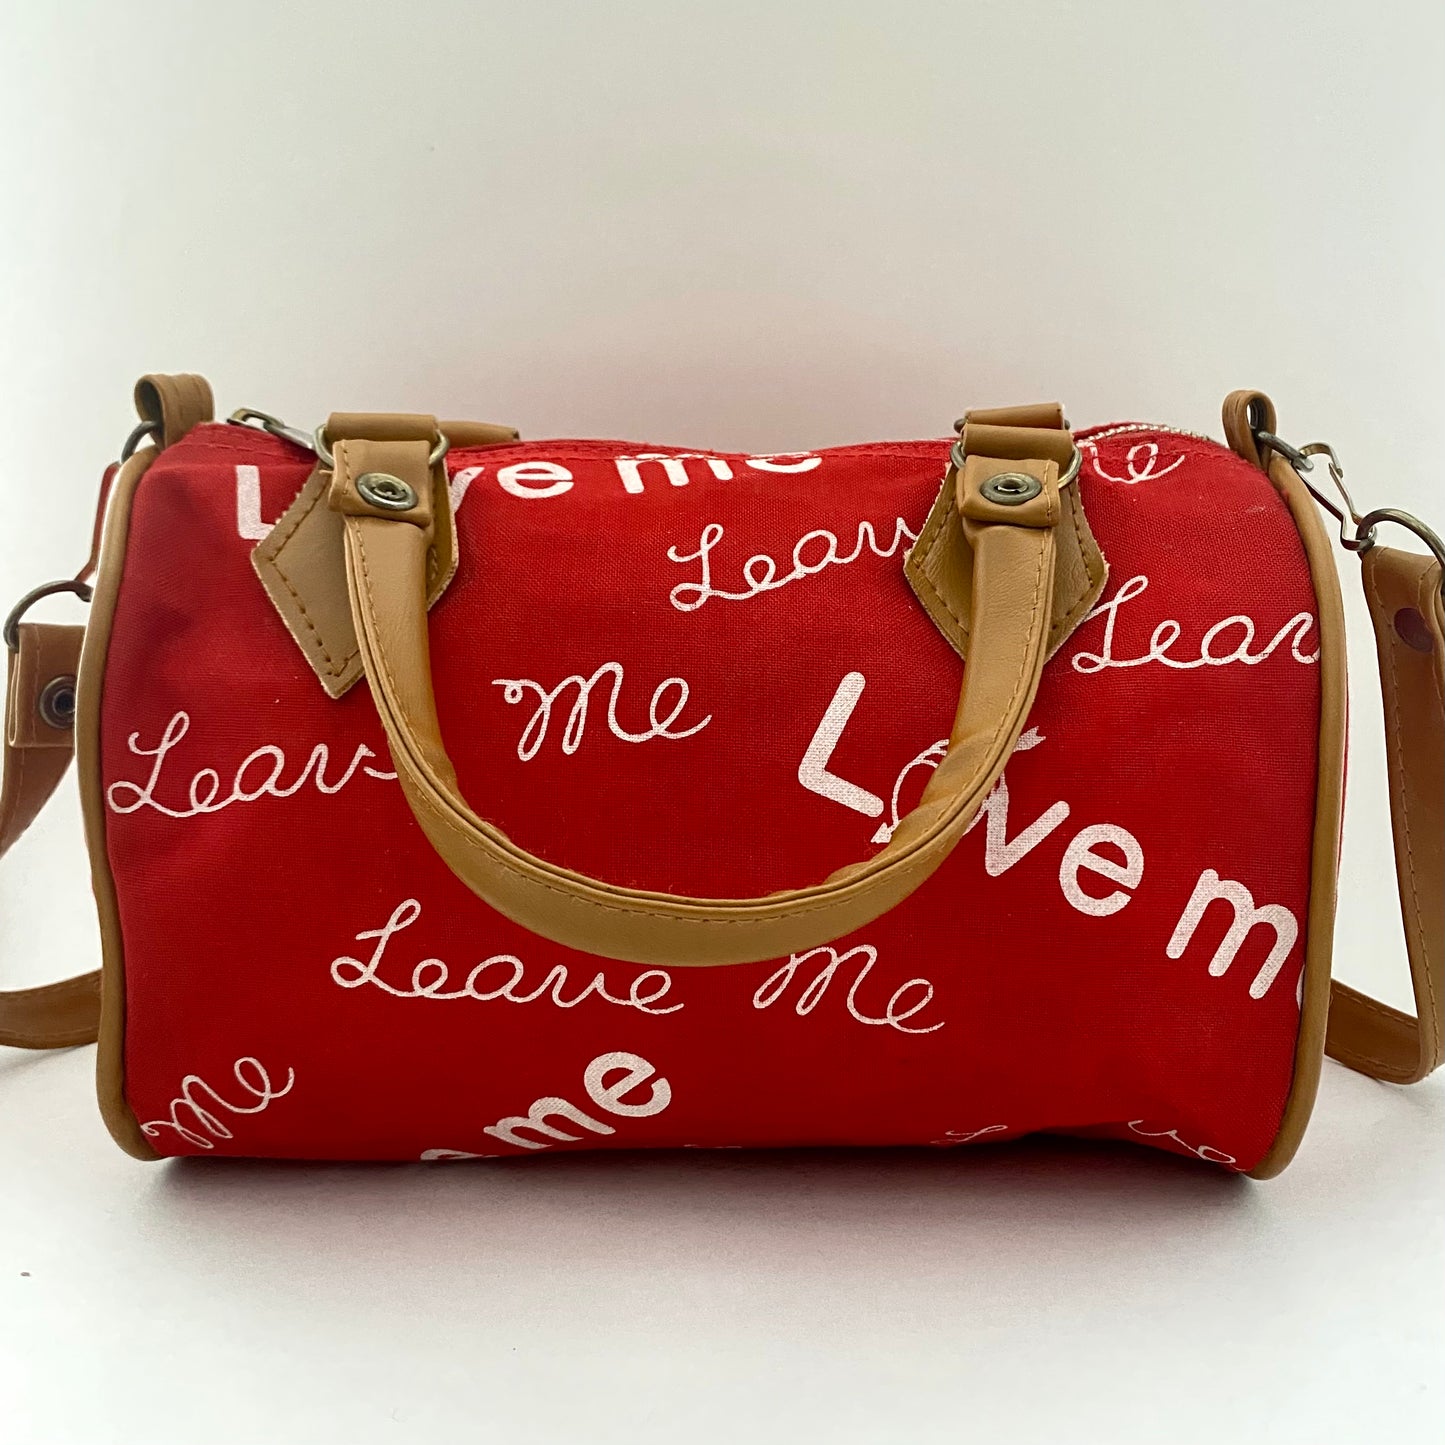 1980s "Love Me, Leave Me" Canvas Handbag